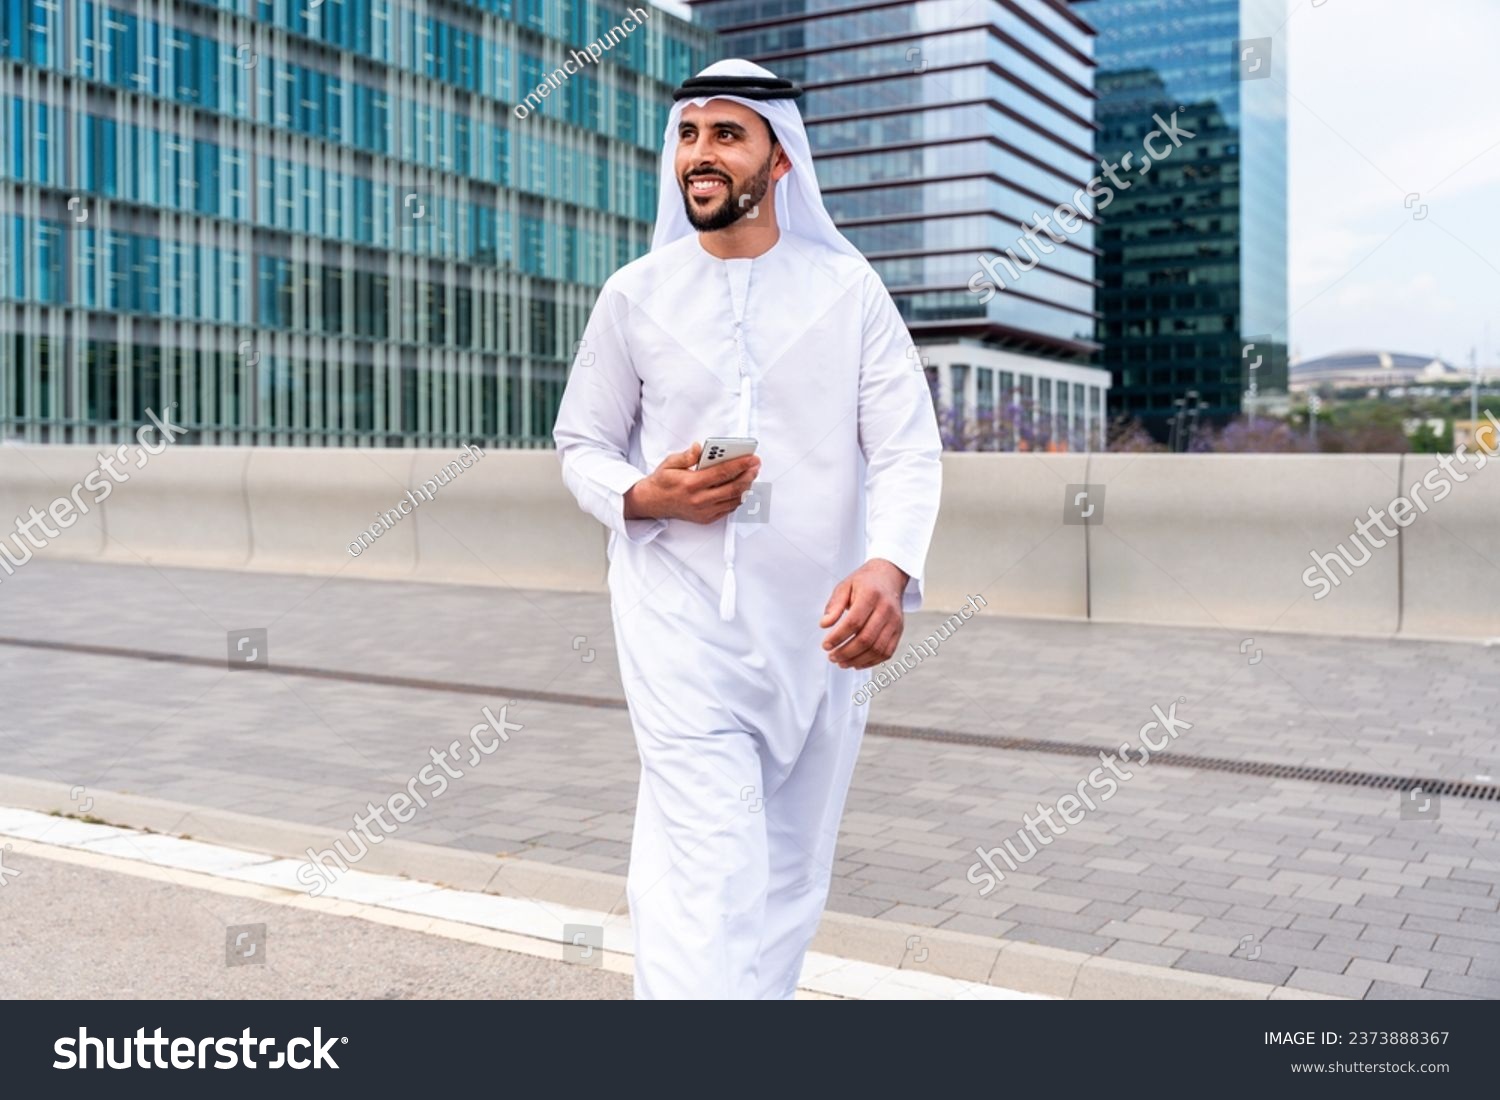 Arab middle-eastern man wearing emirati kandora traditional clothing in the city - Arabian muslim businessman strolling in urban business centre. #2373888367